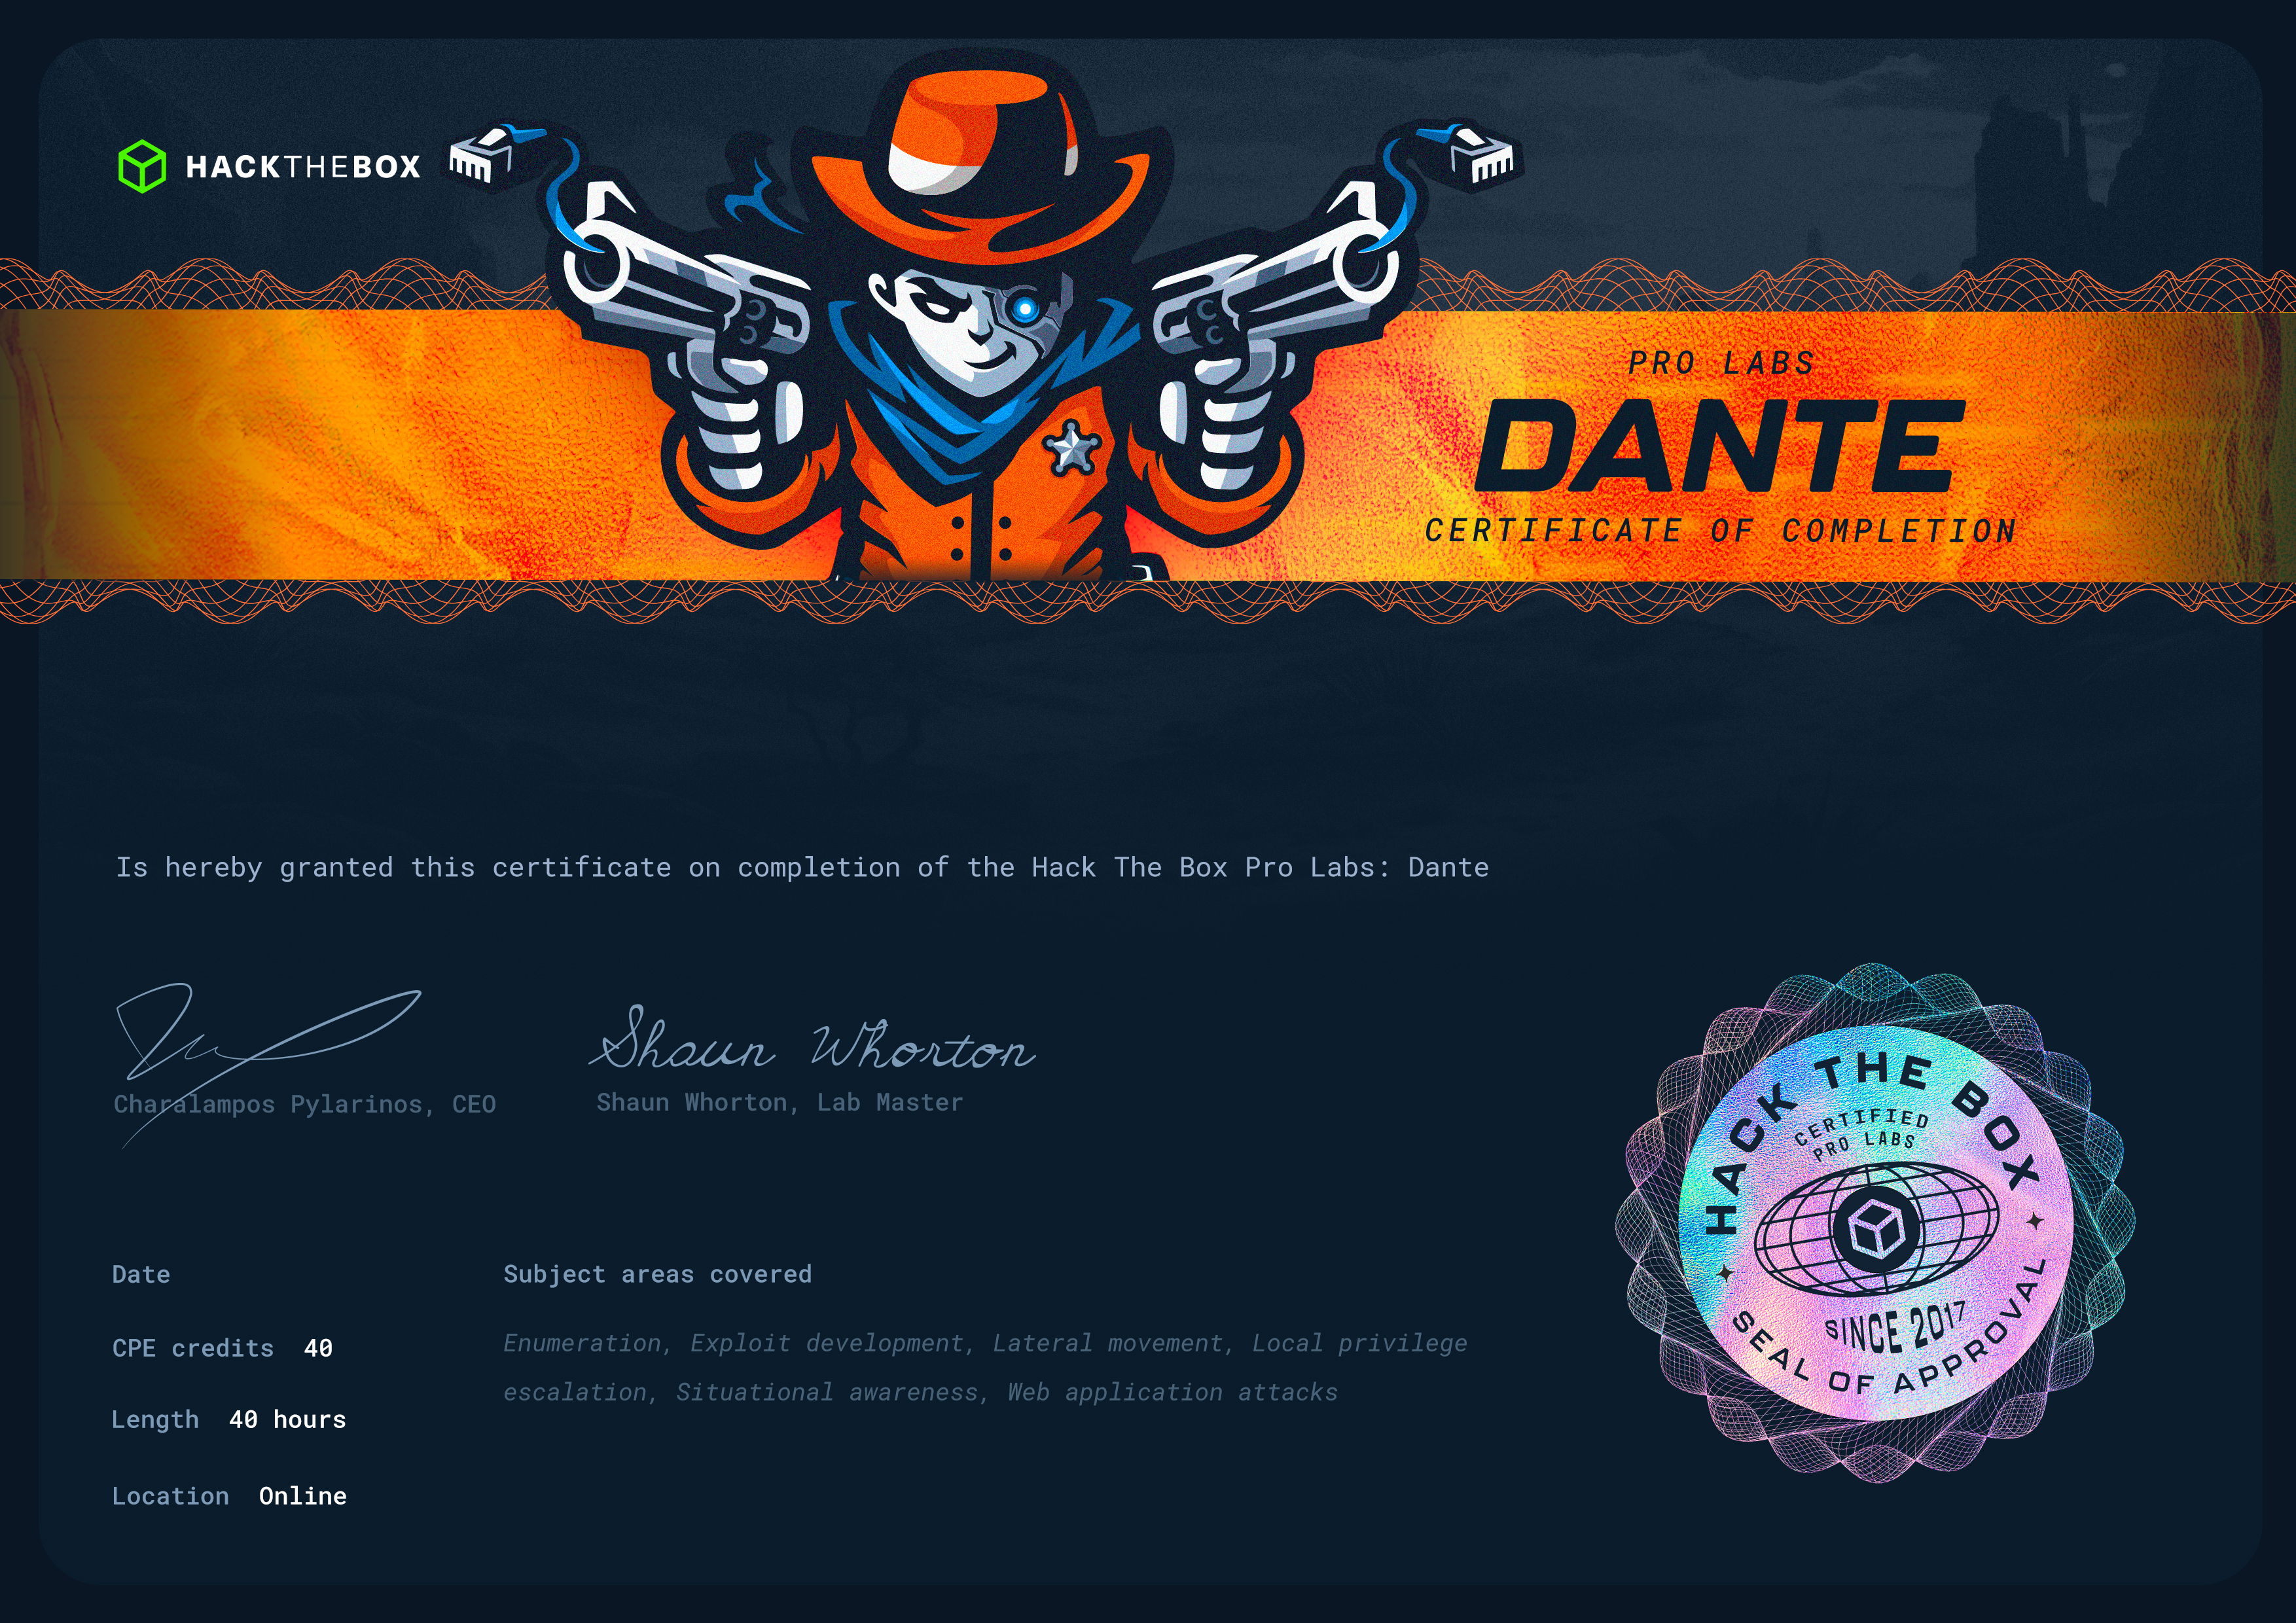 Dante Certificate